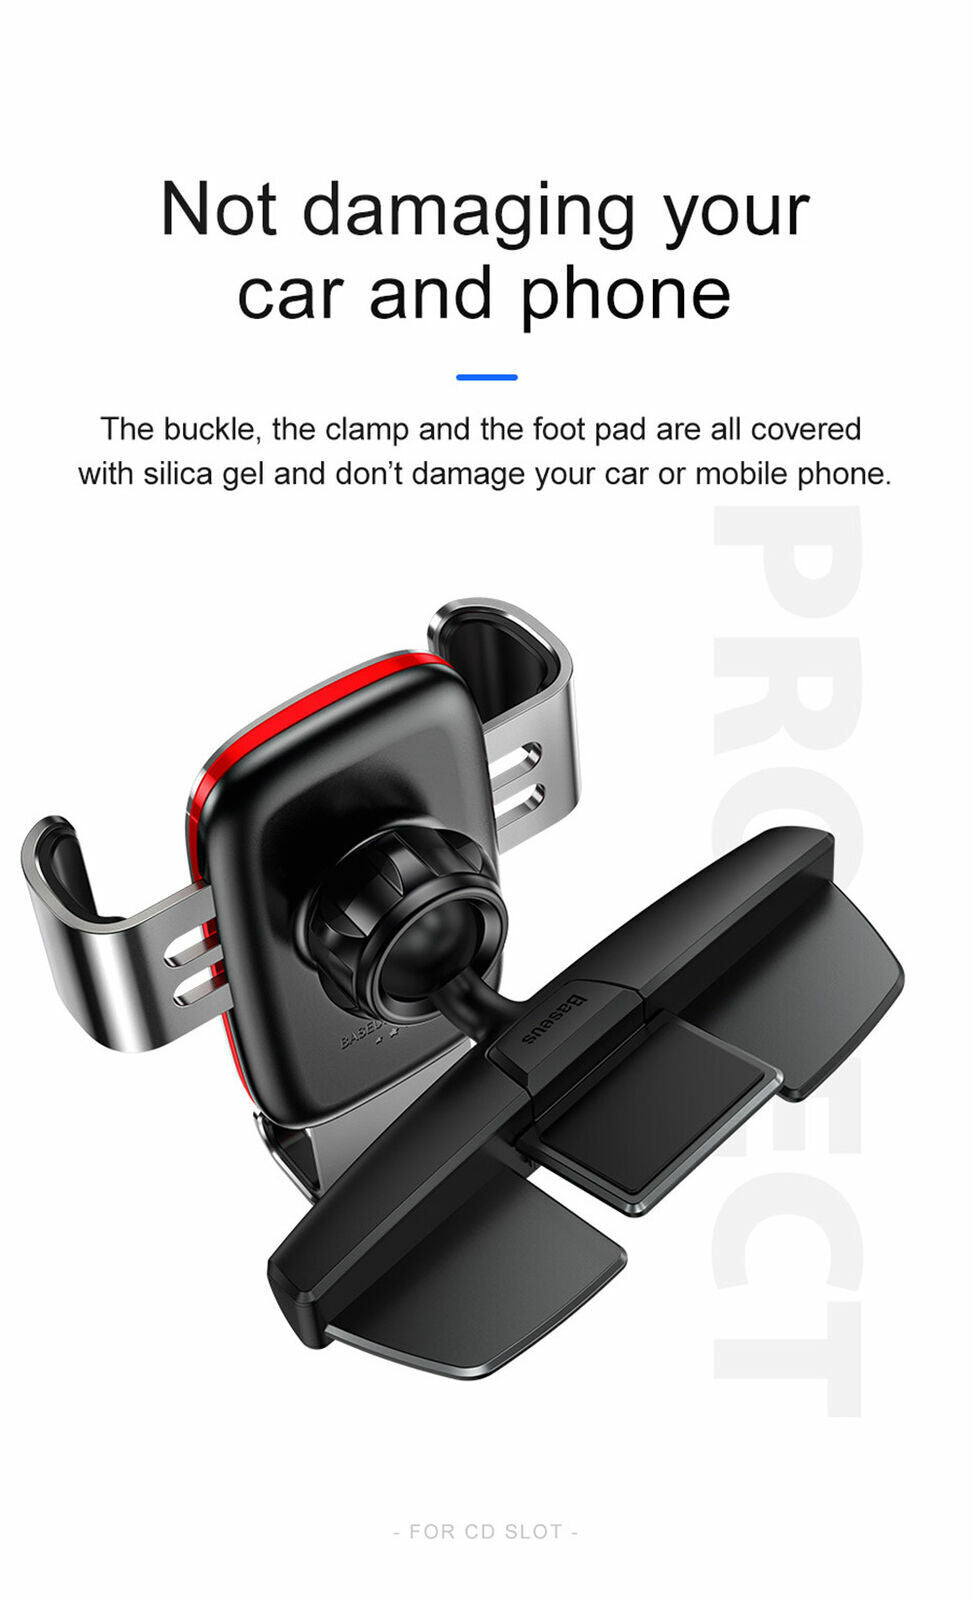 Baseus Universal Phone Gravity CD Slot Air Vent Car Holder Stand Mount Clip AU